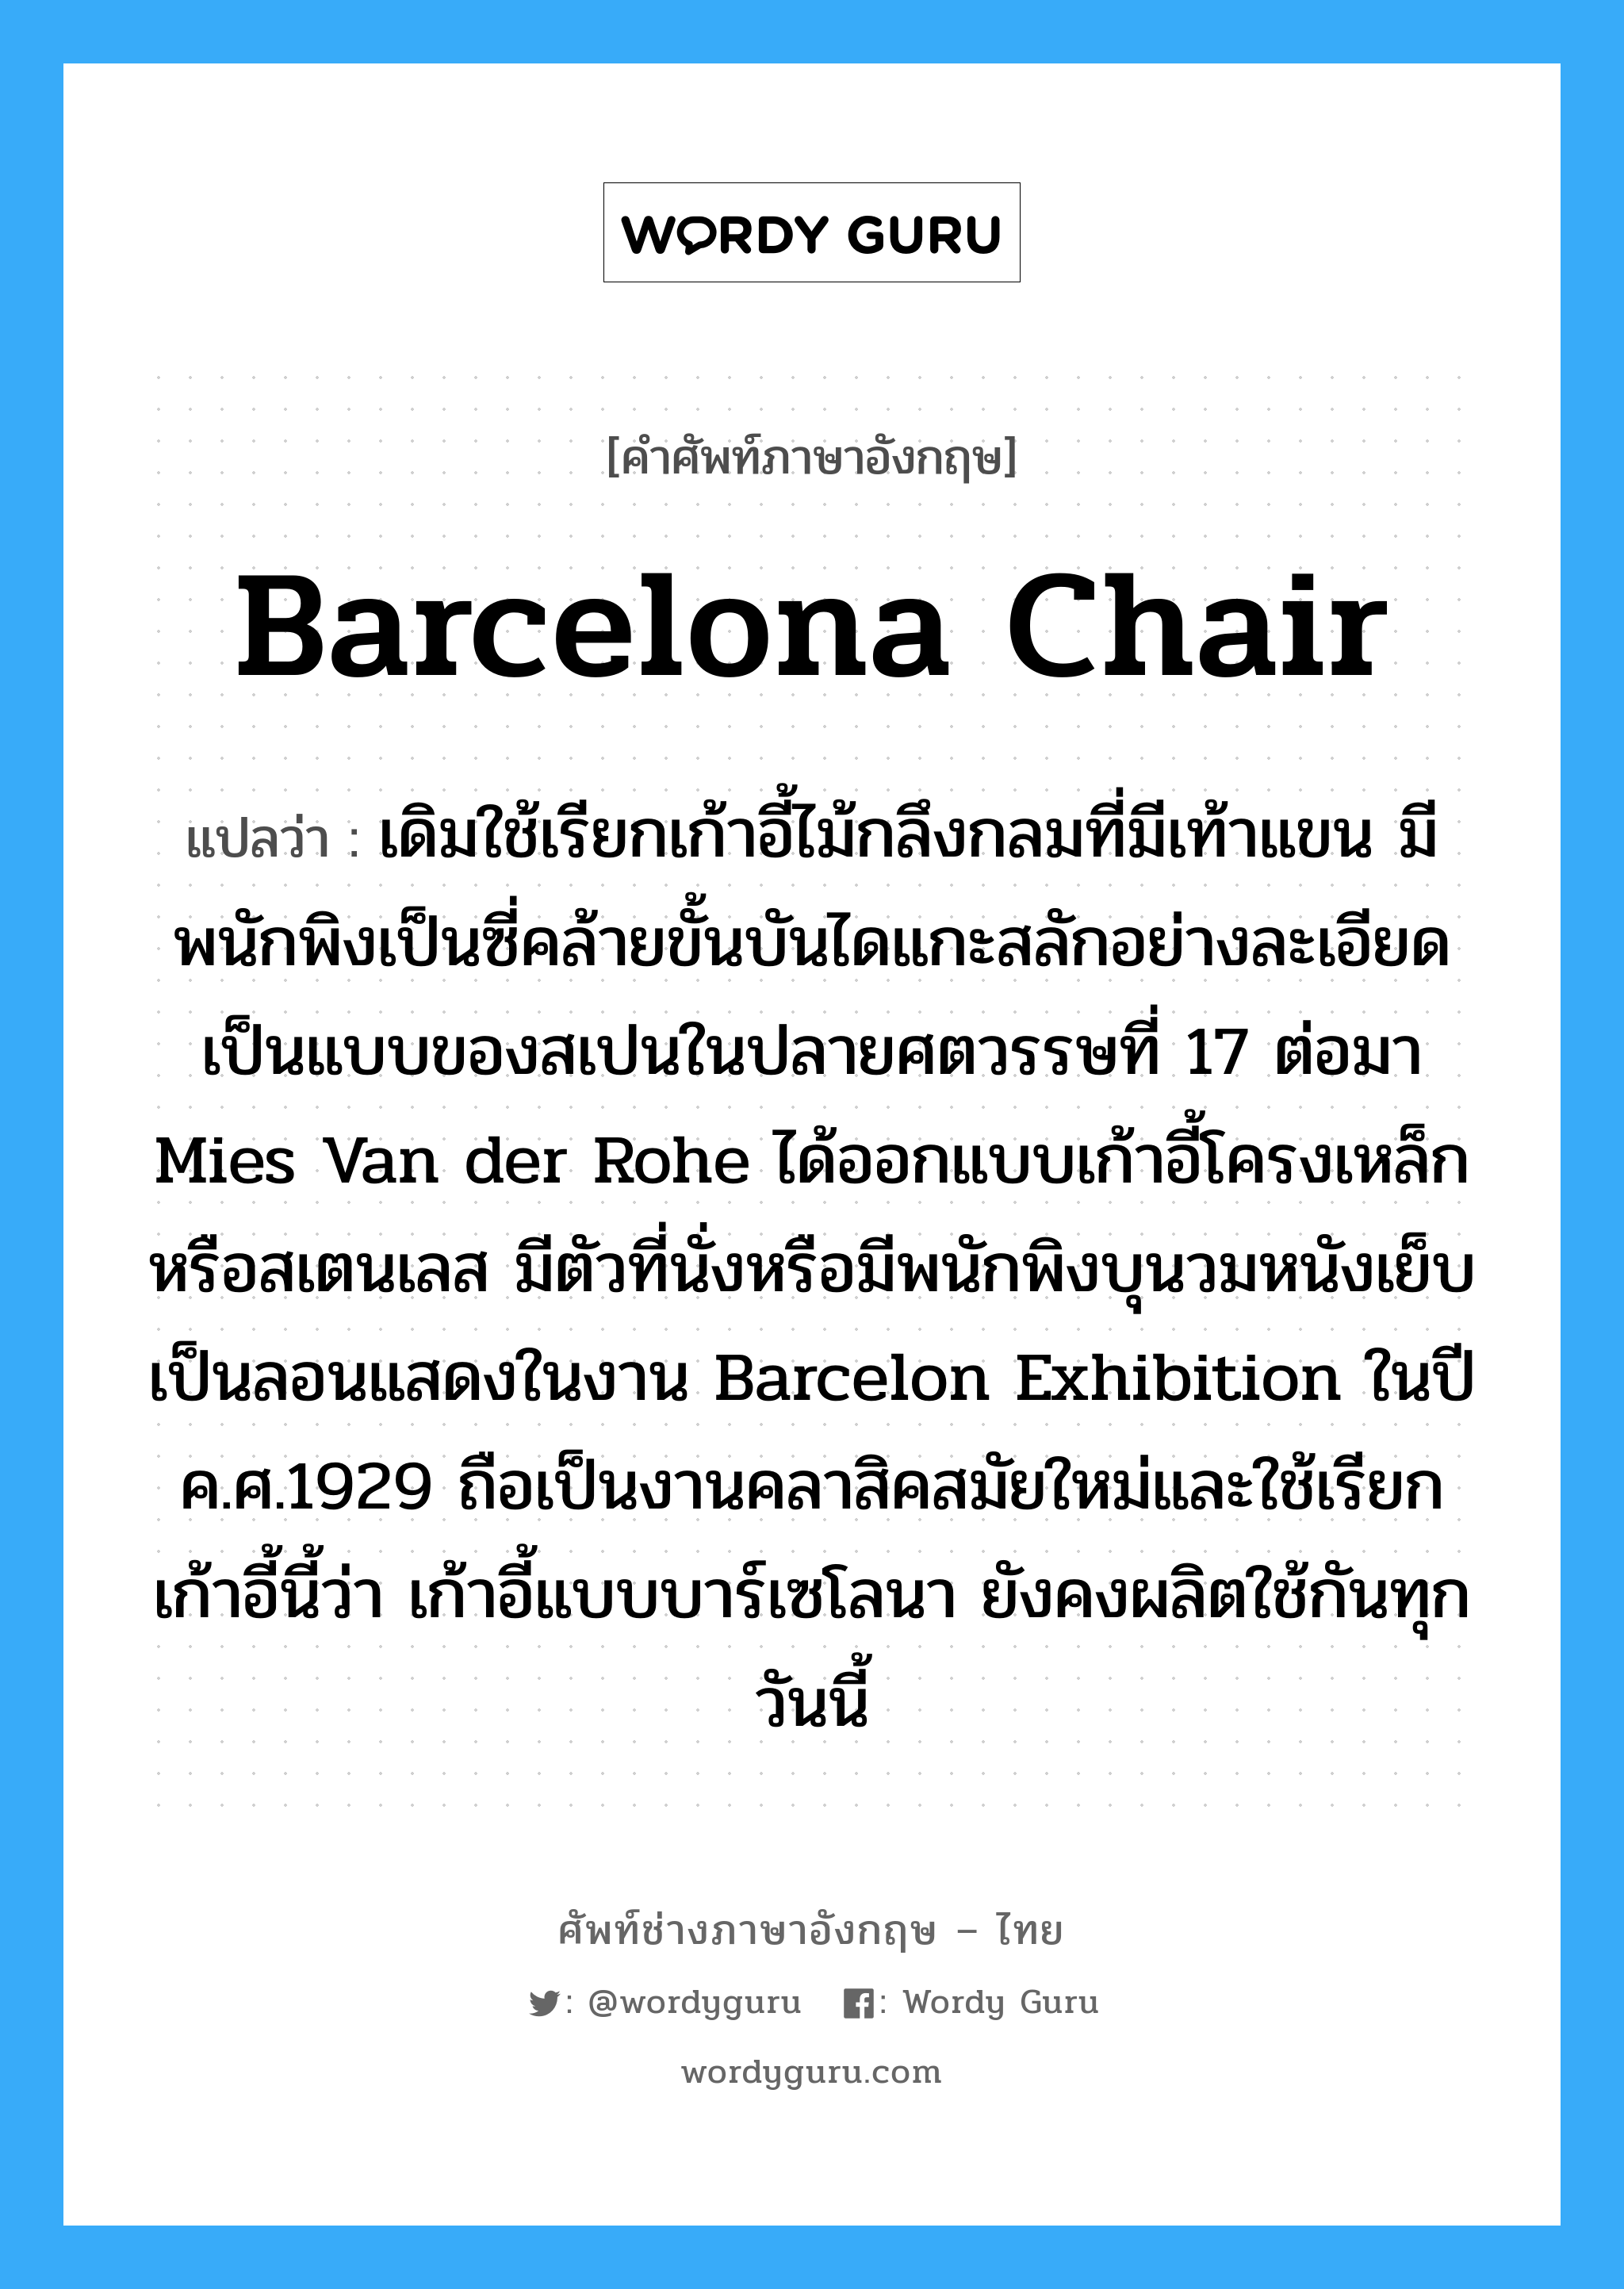 barcelona chair แปลว่า?, คำศัพท์ช่างภาษาอังกฤษ - ไทย barcelona chair คำศัพท์ภาษาอังกฤษ barcelona chair แปลว่า เดิมใช้เรียกเก้าอี้ไม้กลึงกลมที่มีเท้าแขน มีพนักพิงเป็นซี่คล้ายขั้นบันไดแกะสลักอย่างละเอียด เป็นแบบของสเปนในปลายศตวรรษที่ 17 ต่อมา Mies Van der Rohe ได้ออกแบบเก้าอี้โครงเหล็ก หรือสเตนเลส มีตัวที่นั่งหรือมีพนักพิงบุนวมหนังเย็บเป็นลอนแสดงในงาน Barcelon Exhibition ในปี ค.ศ.1929 ถือเป็นงานคลาสิคสมัยใหม่และใช้เรียกเก้าอี้นี้ว่า เก้าอี้แบบบาร์เซโลนา ยังคงผลิตใช้กันทุกวันนี้